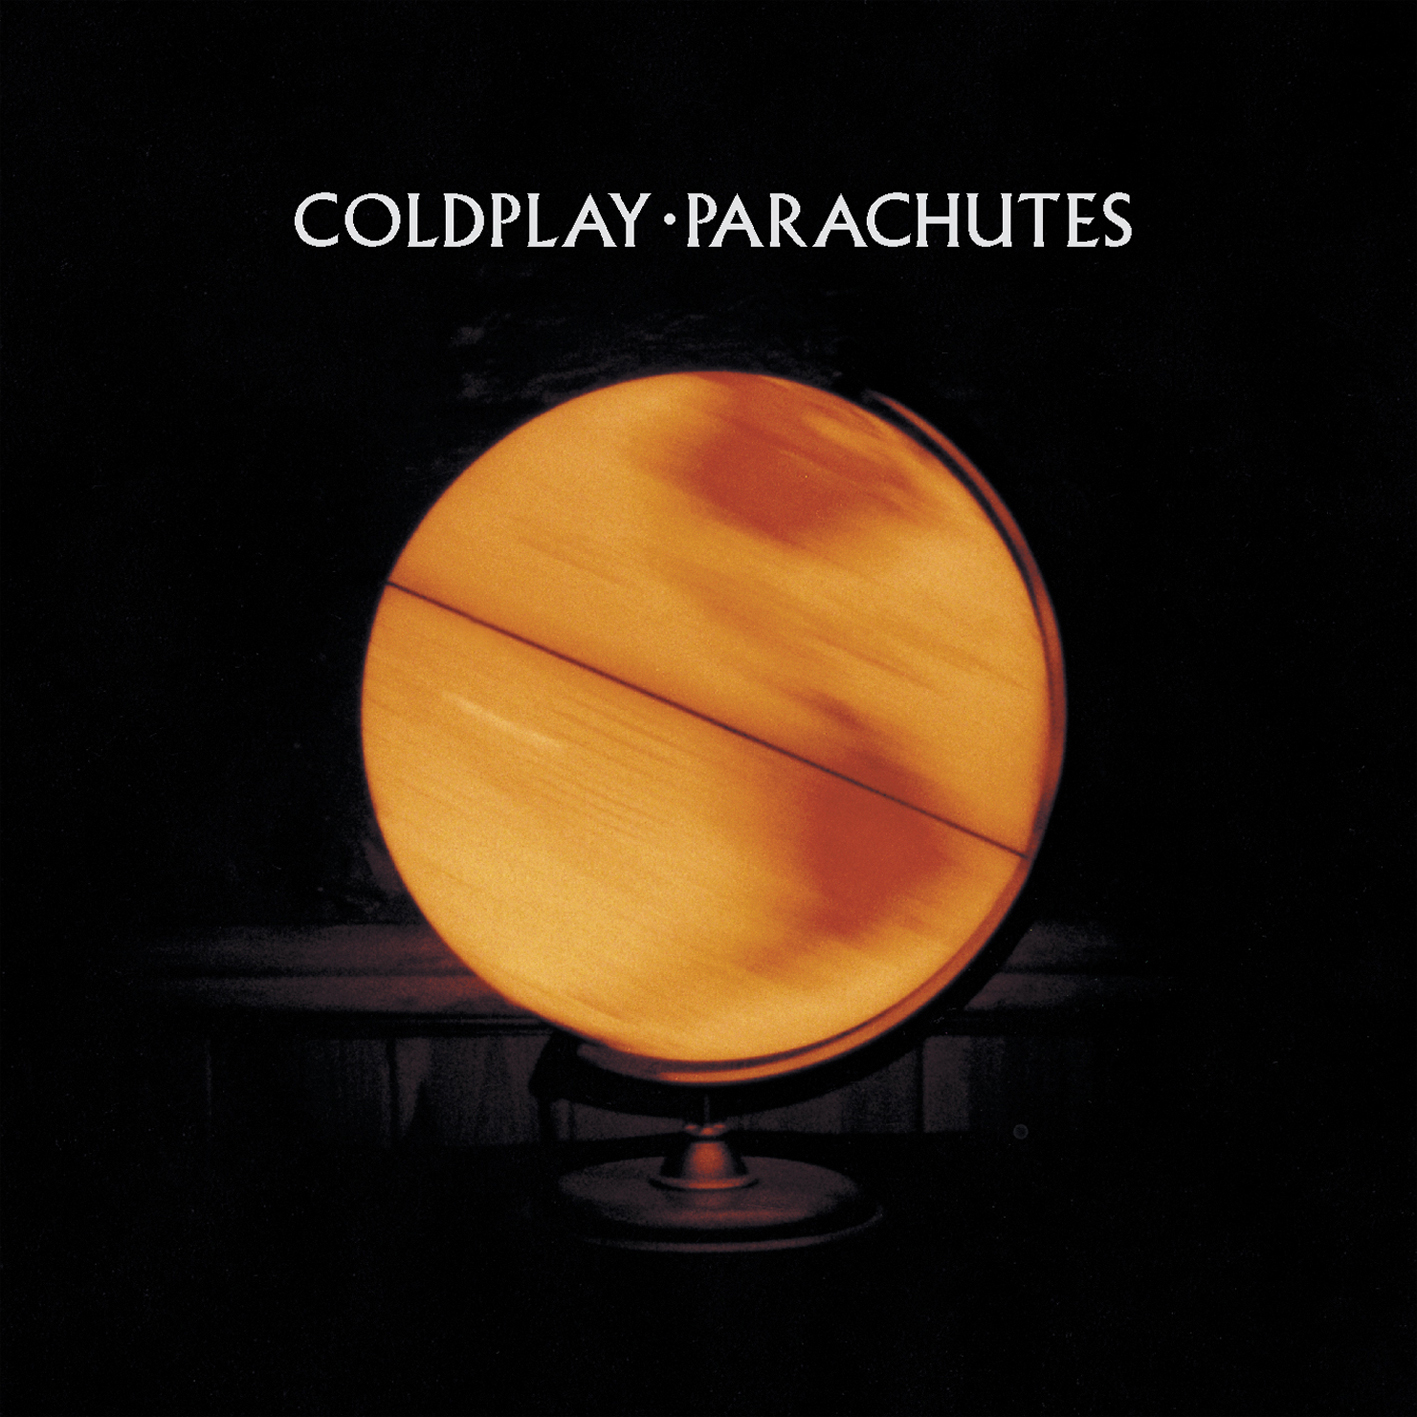 Coldplay – Parachutes (2000/2016) [HDTracks FLAC 24bit/192kHz]